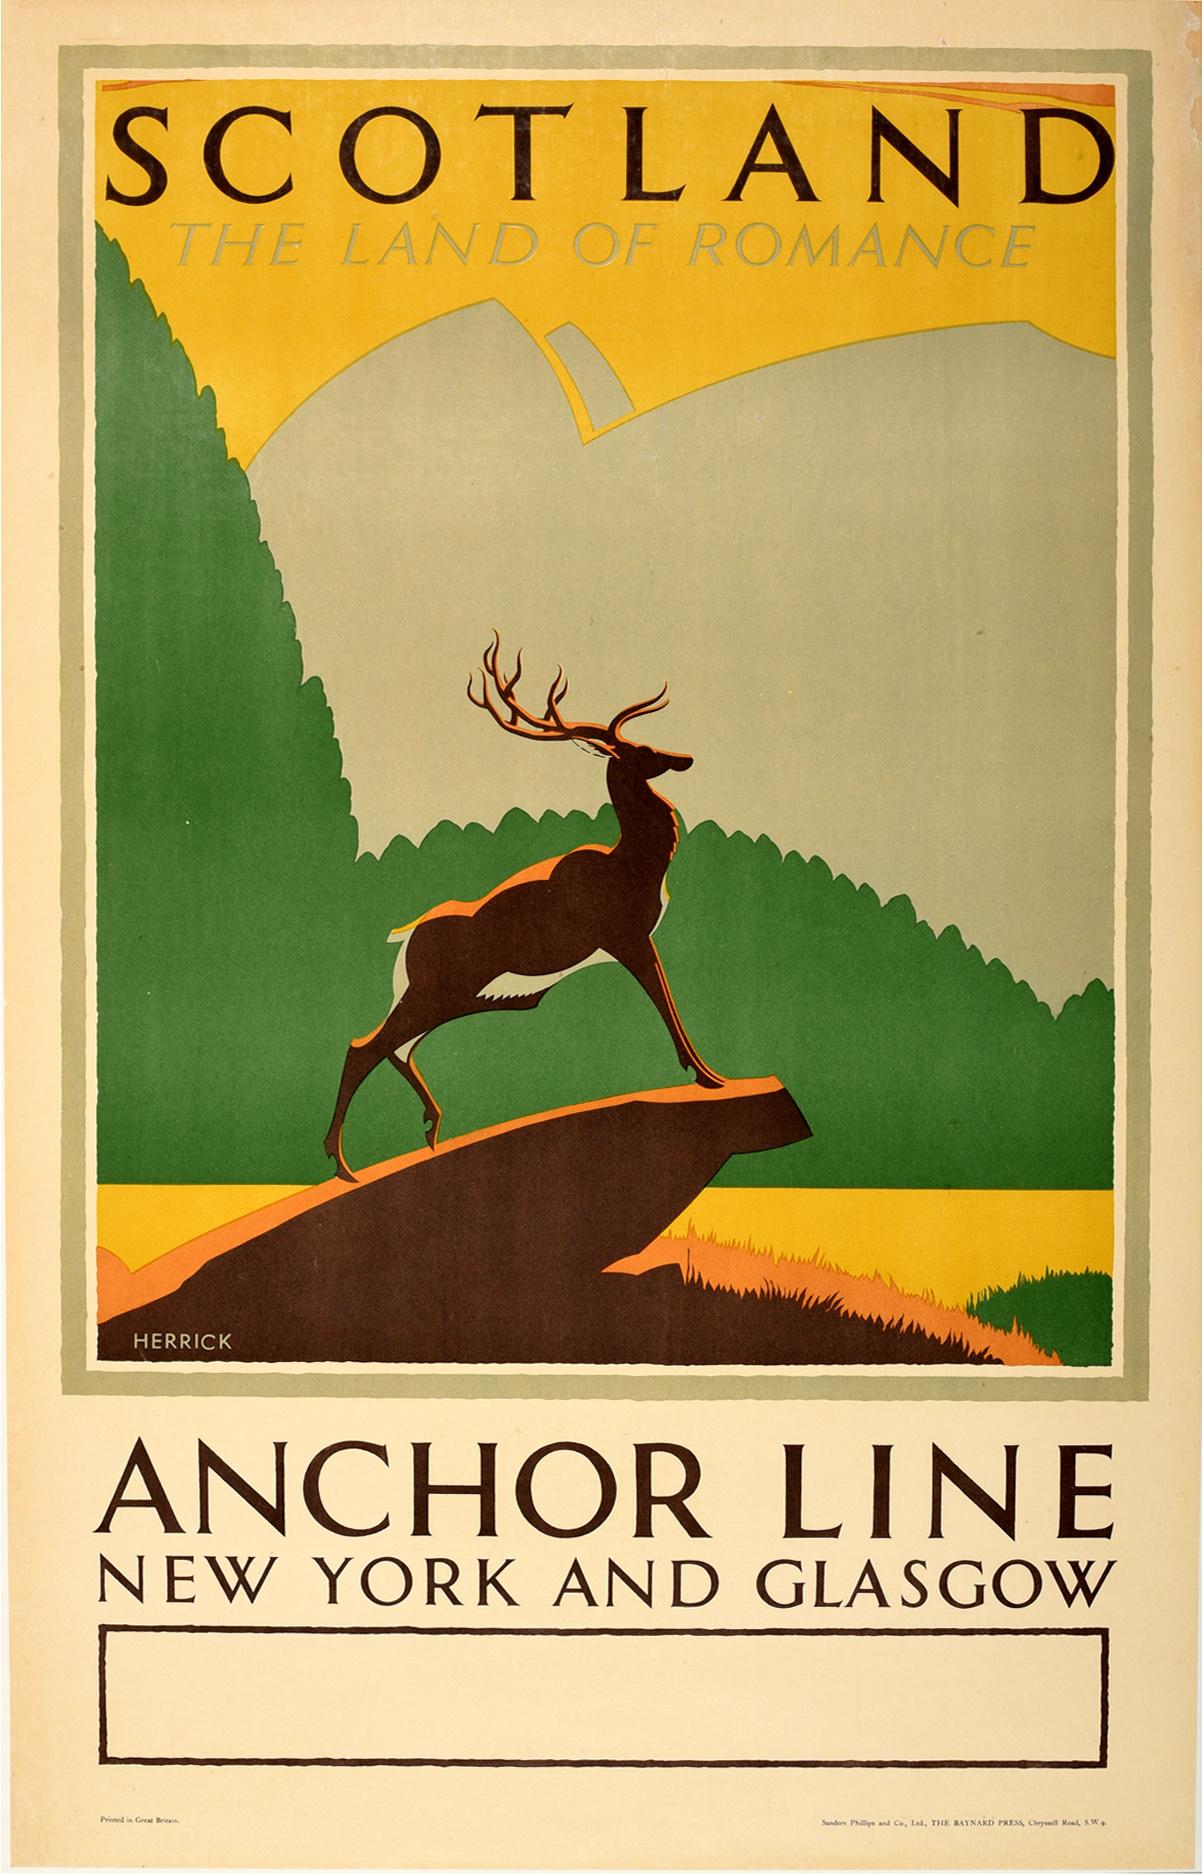 Frederick Charles Herrick Print - Original Vintage Travel Poster Scotland The Land Of Romance Anchor Line Shipping